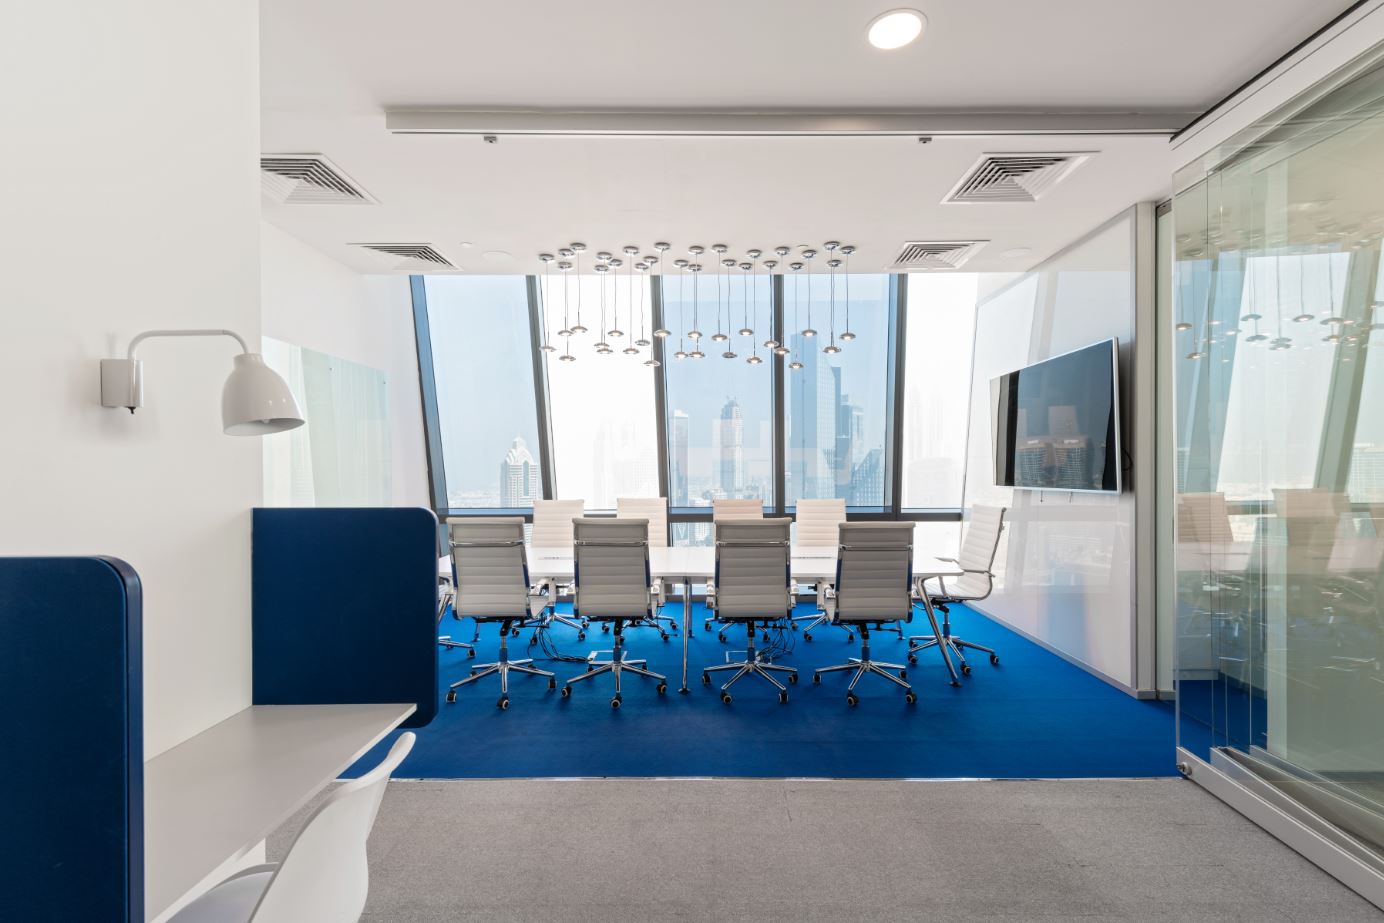 YAP office in Dubai office designed by DZ Design